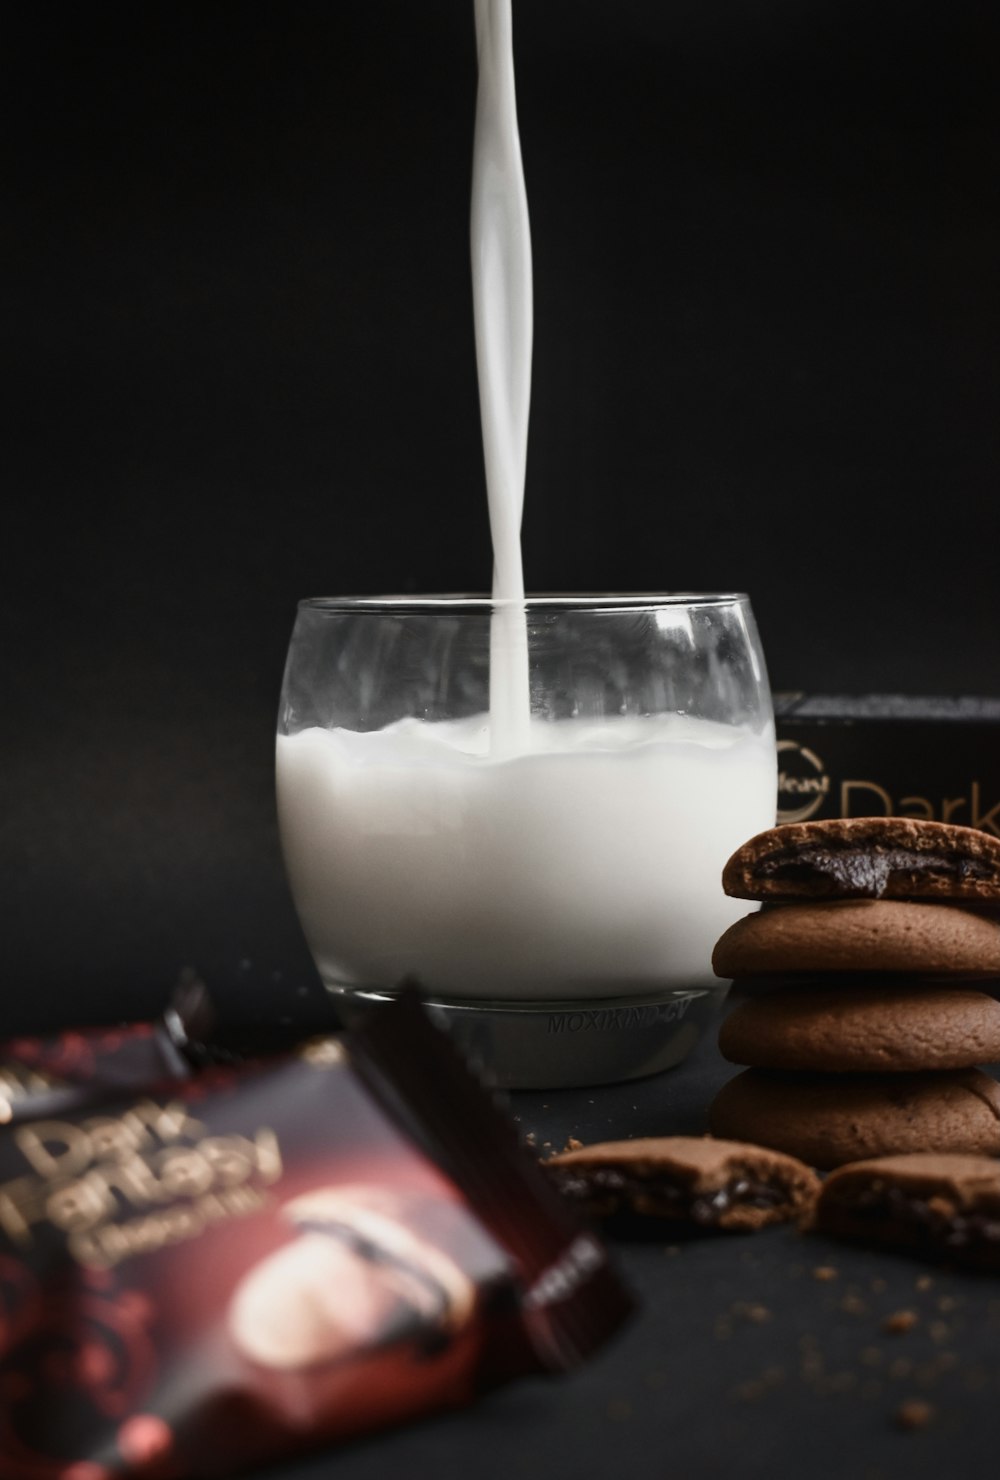 milk in clear drinking glass beside cookies on black plate